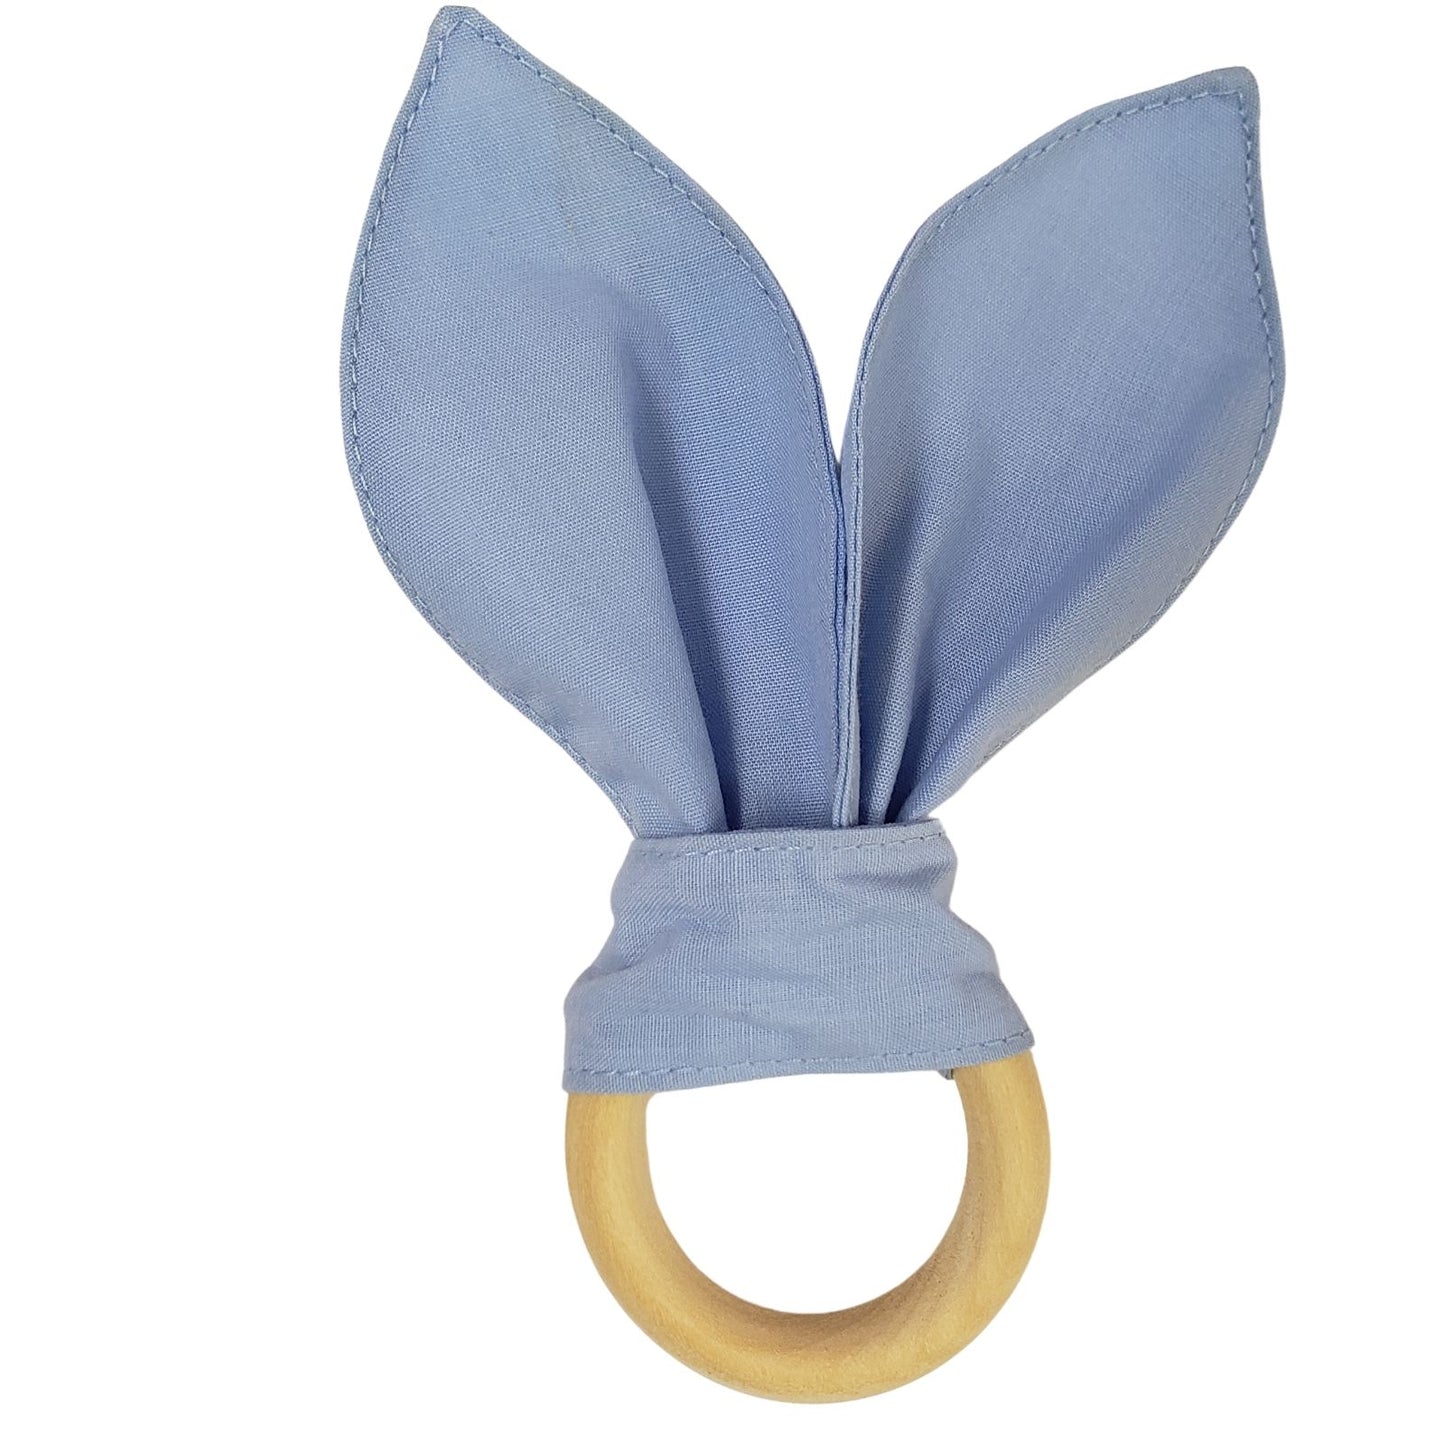 Maison Charlo | Easter Set of 4 Blue Sky Bunny Ears Napkin Rings | Dining Table Decor